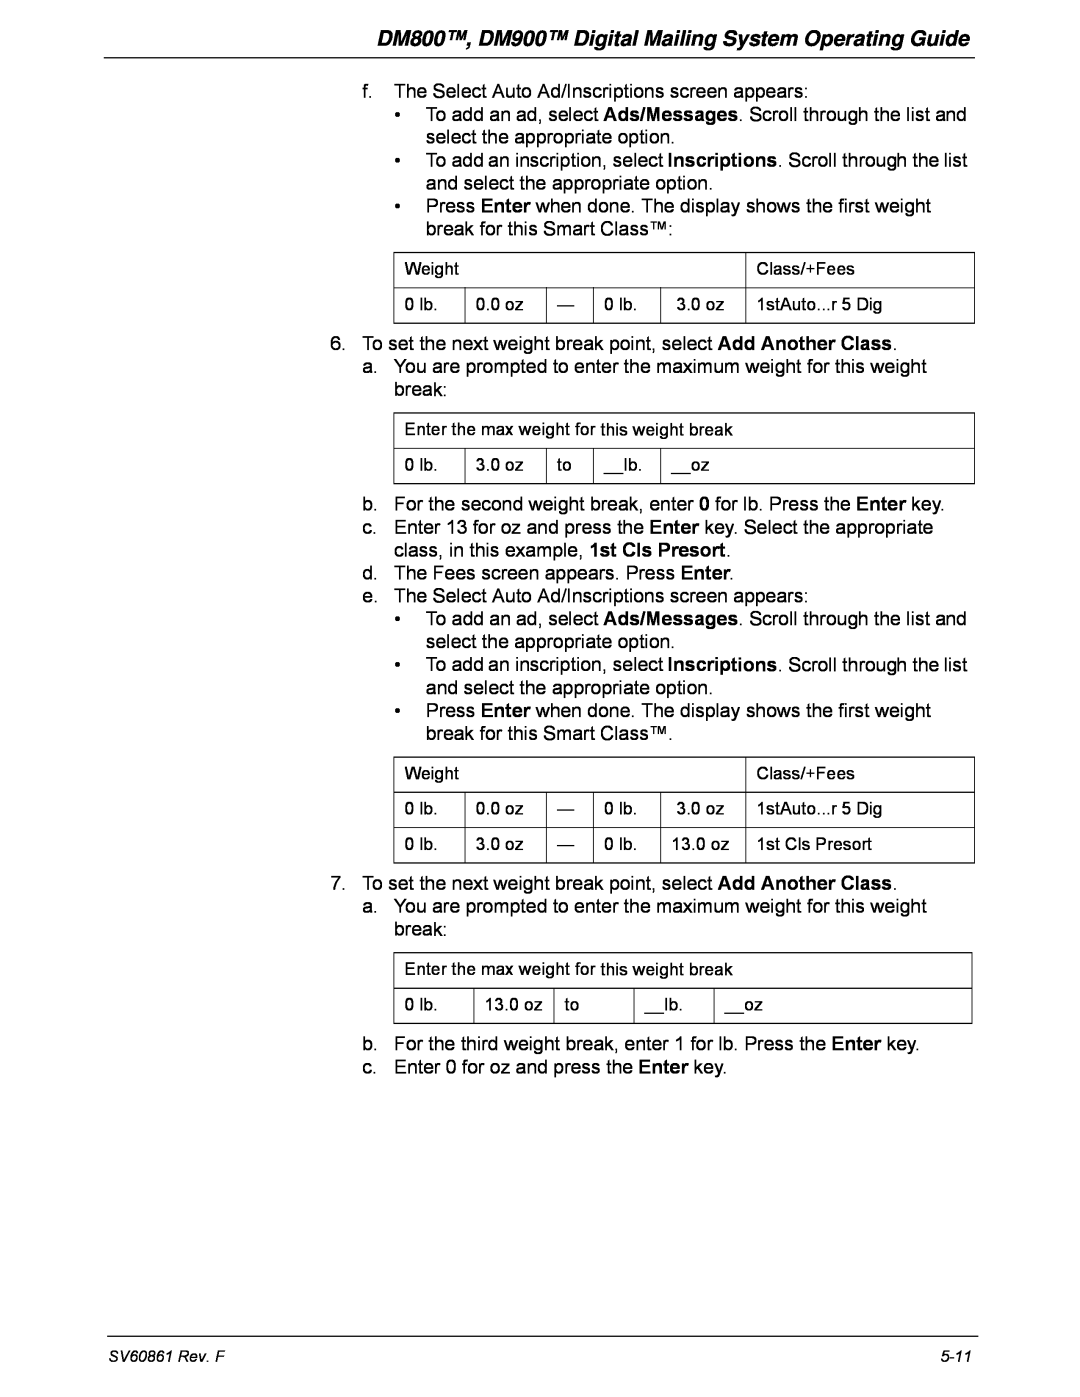 Pitney Bowes manual DM800, DM900 Digital Mailing System Operating Guide 